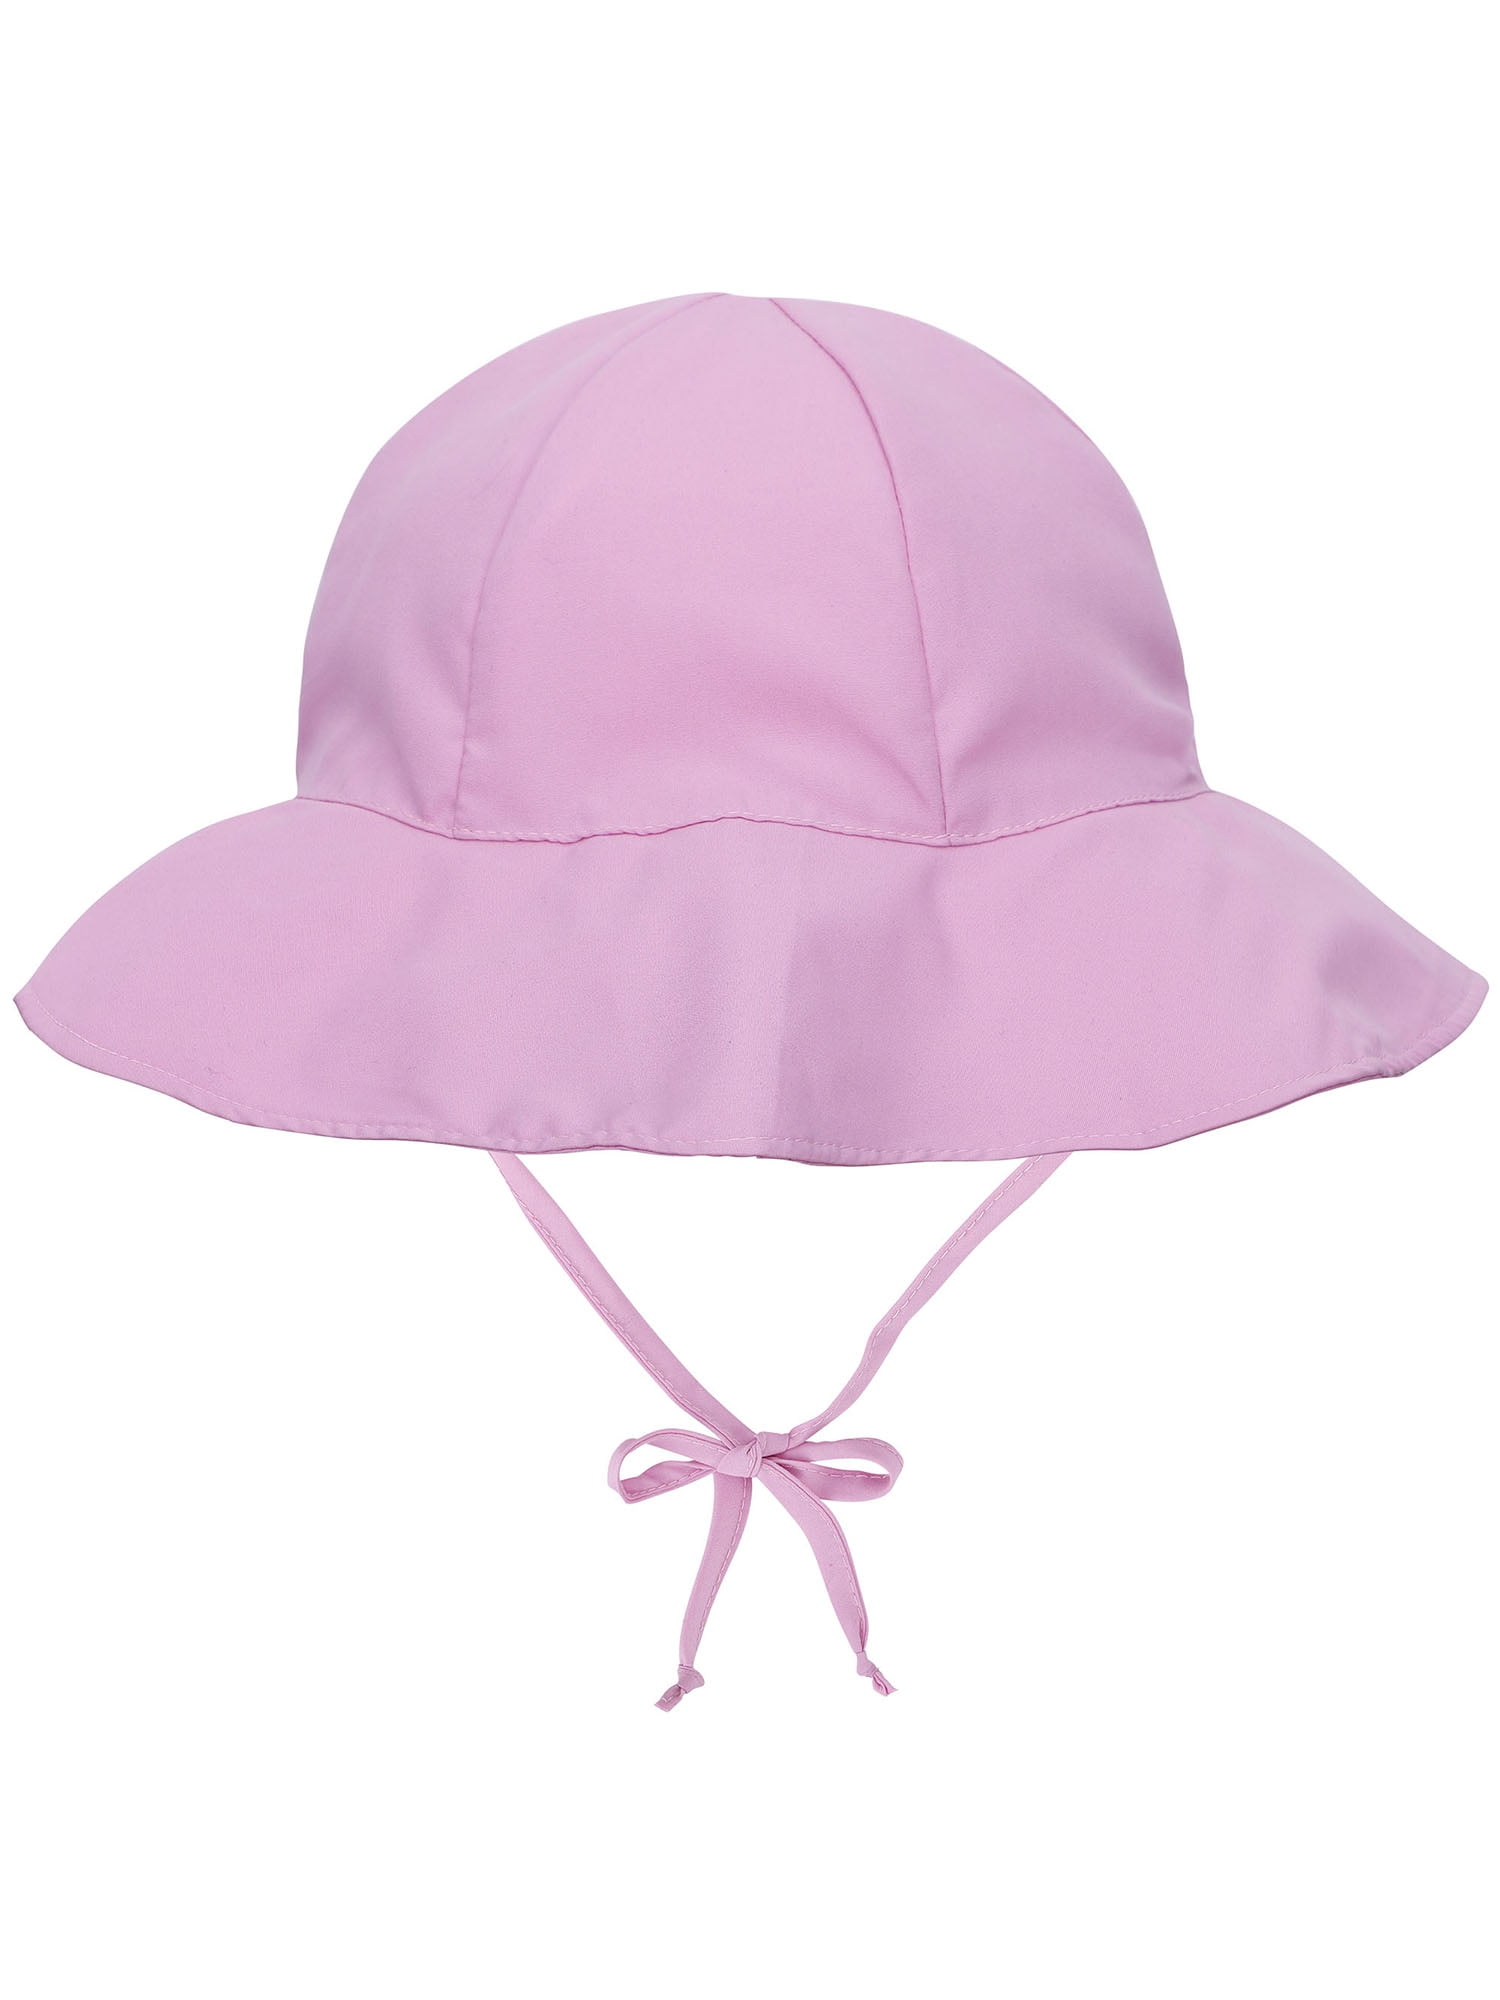 FANTESI 2 Pcs Baby Sun Hat UPF 50 UV Ray Baby Summer Hat Sun Protection Hat with Wide Brim 